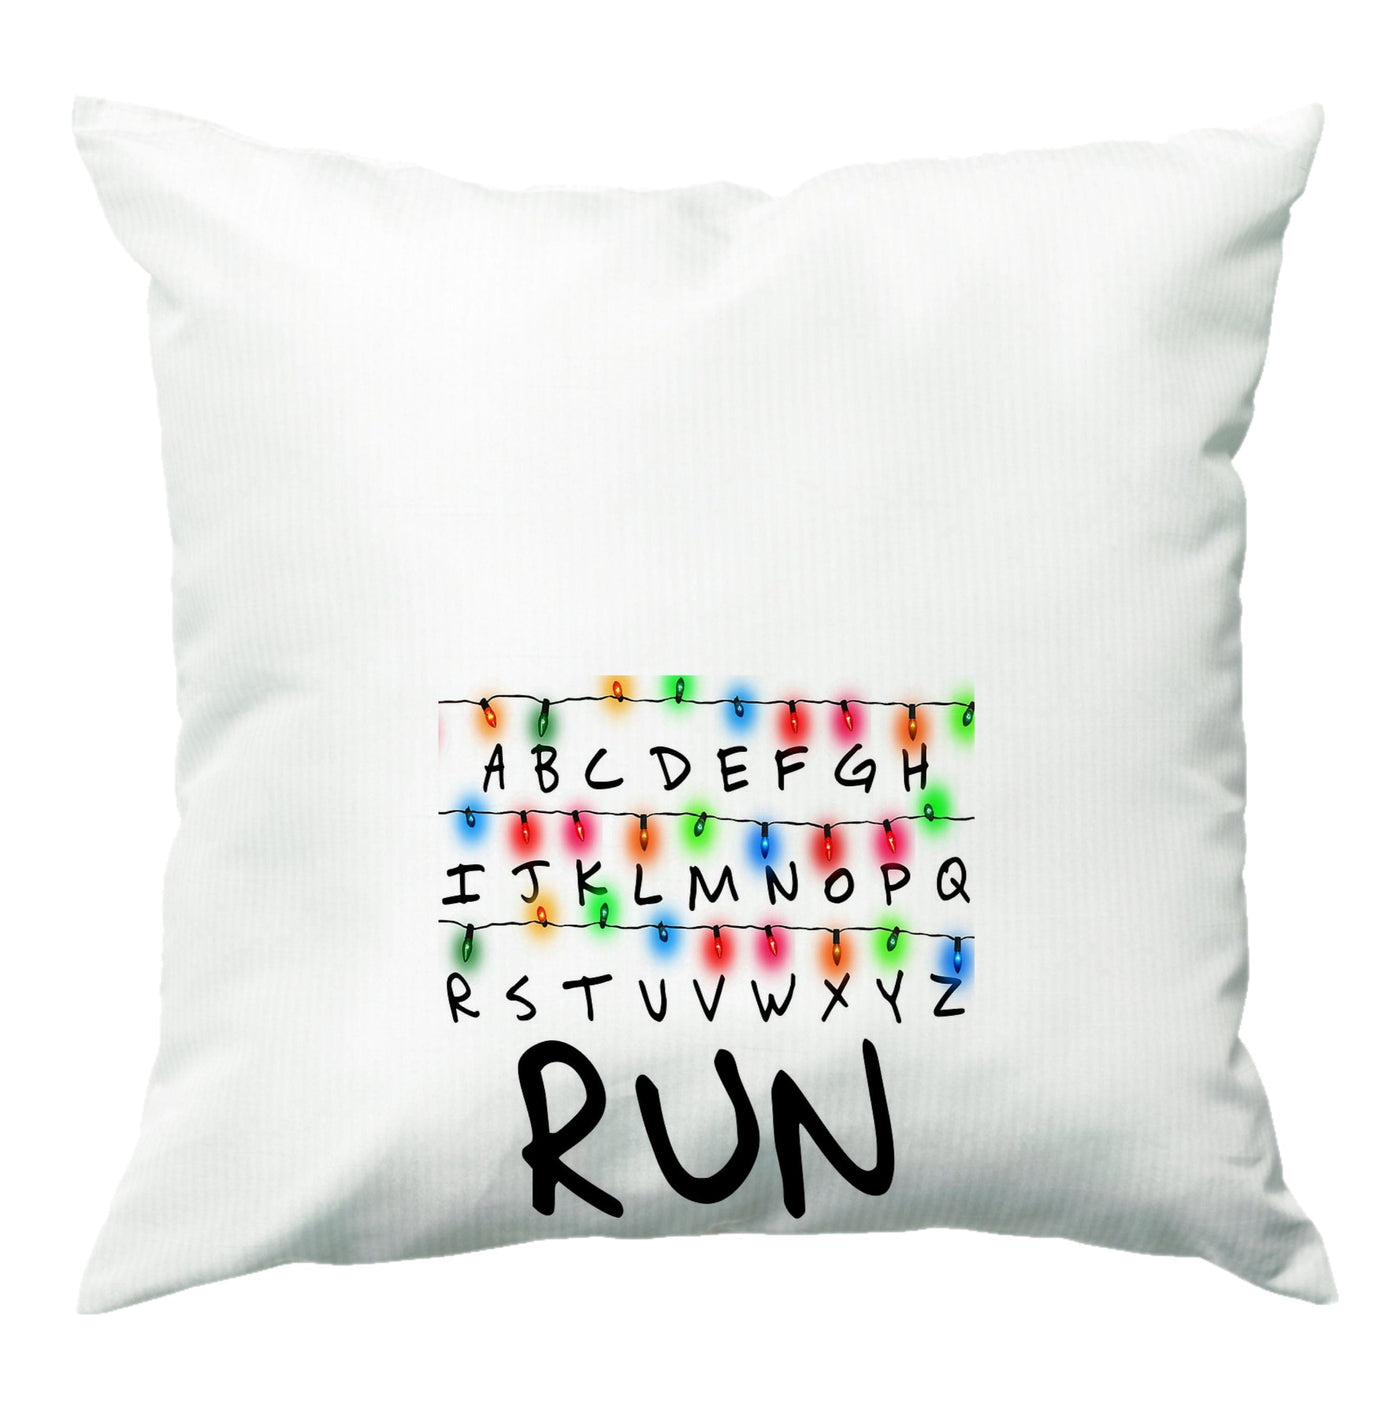 Run - Stranger Things Cushion